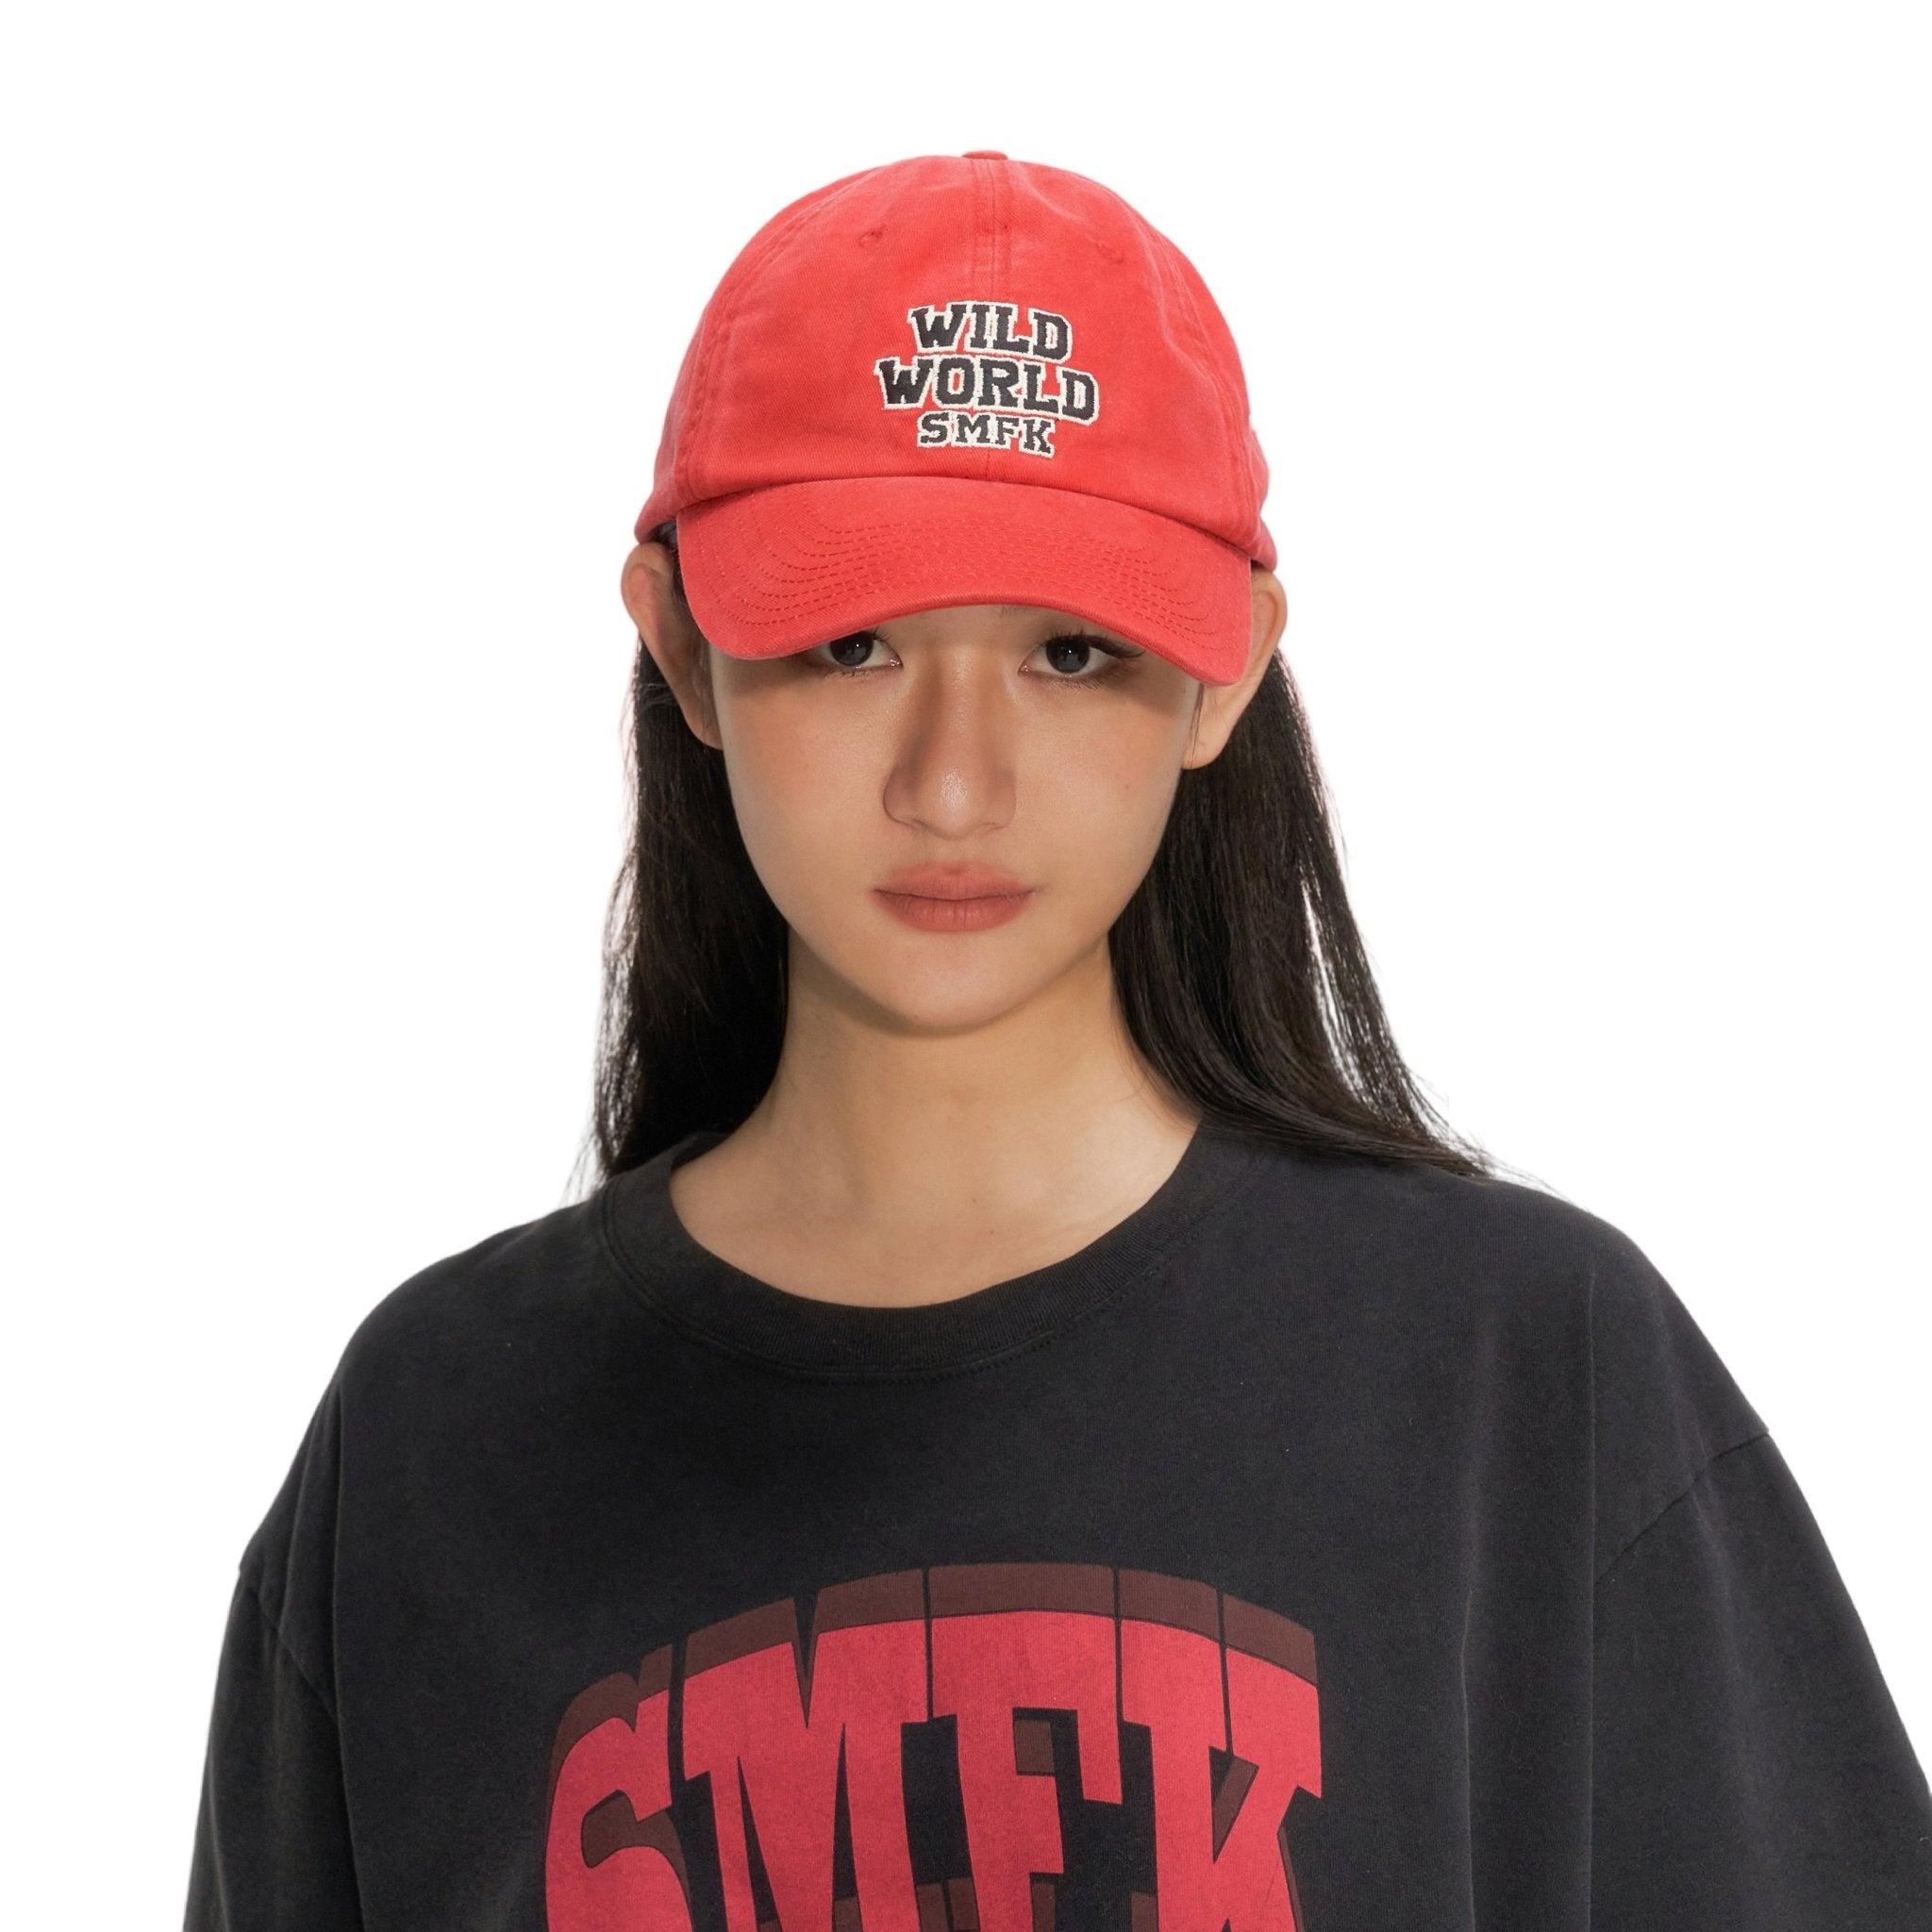 SMFK Wild World Warning Red Baseball Hat | MADA IN CHINA